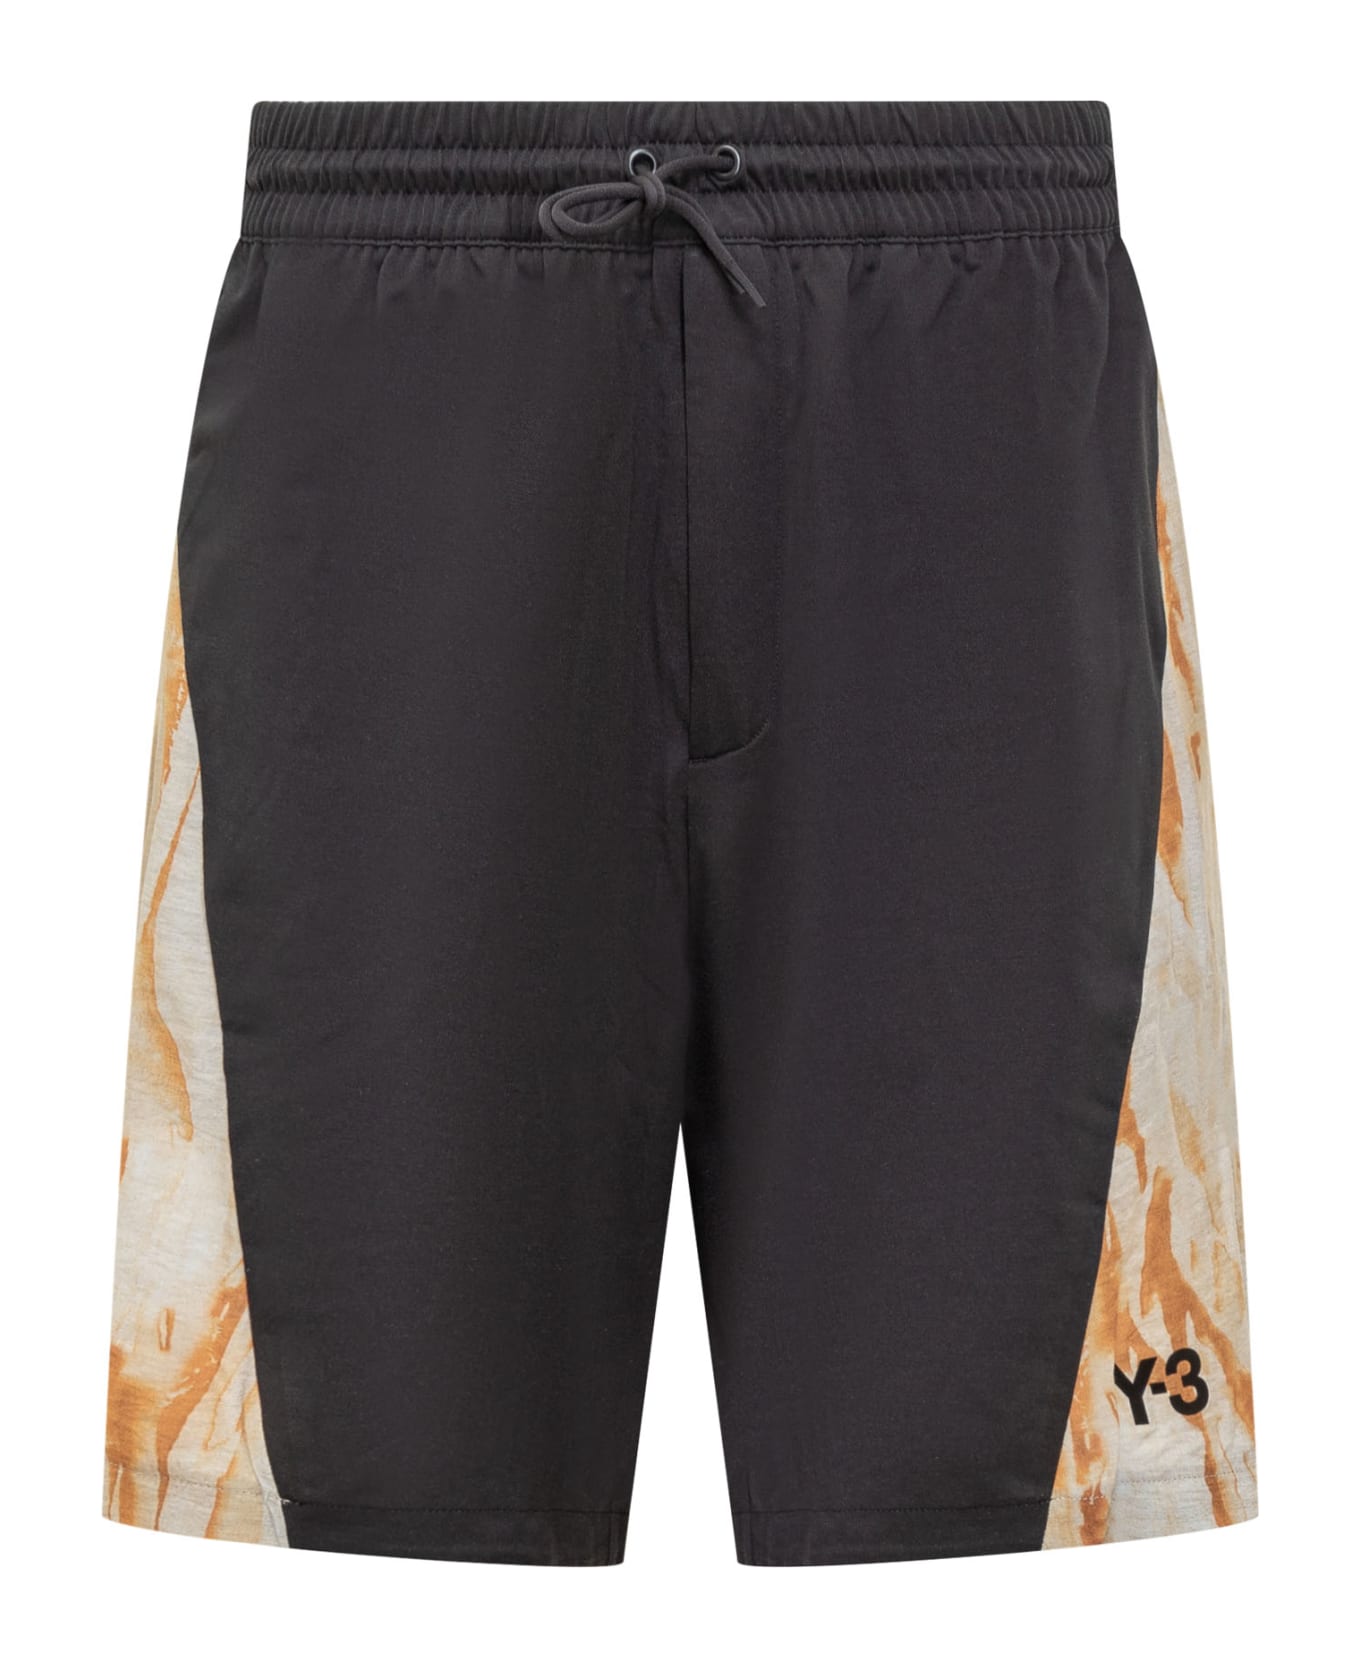 Y-3 Shorts With Rust Dye Print - BLACK/MUCOCA